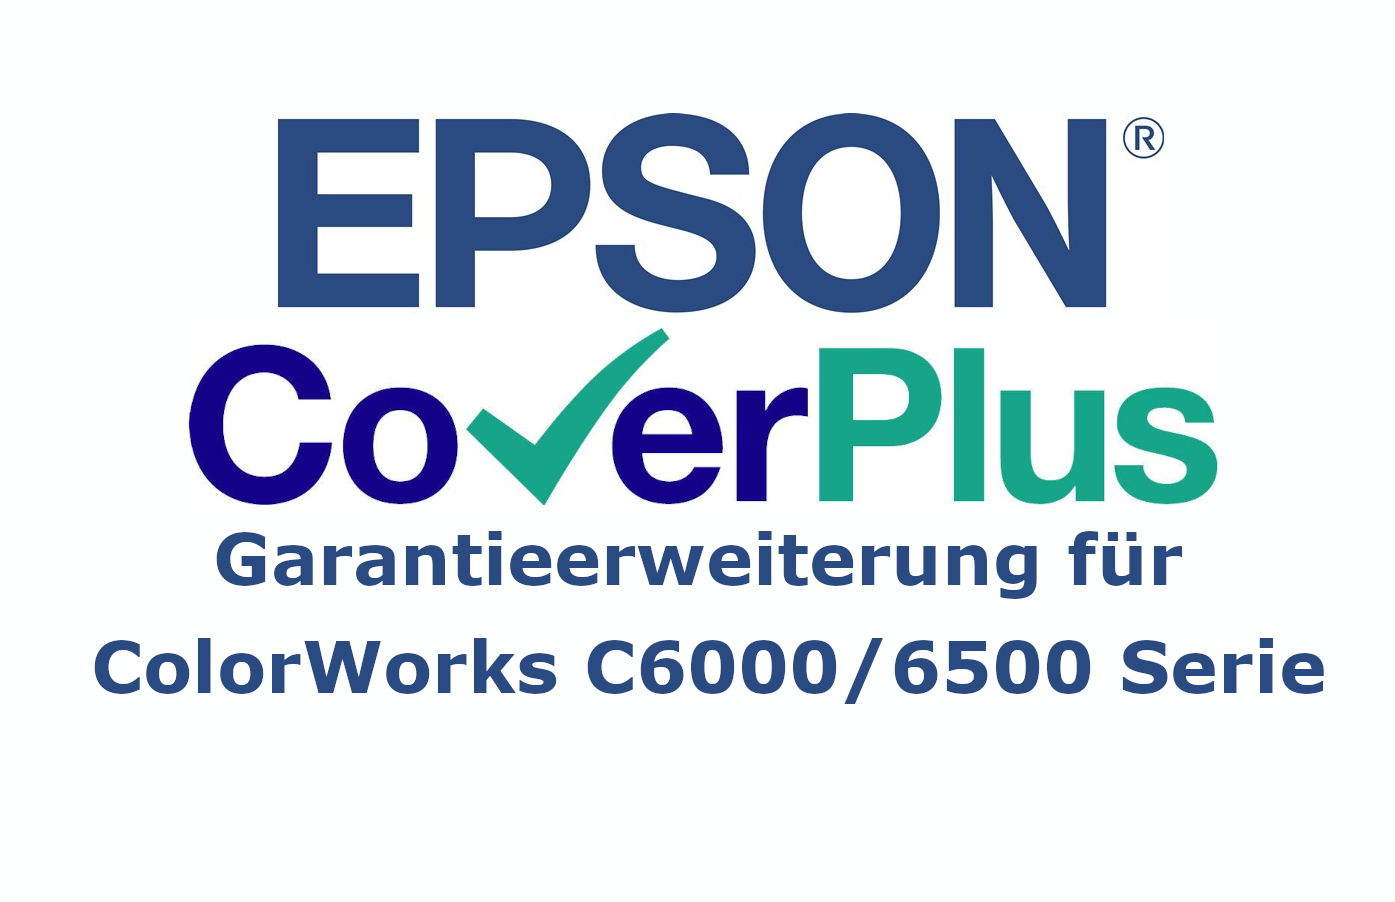 Kuva EPSON ColorWorks Series C6000/6500 - CoverPlus
